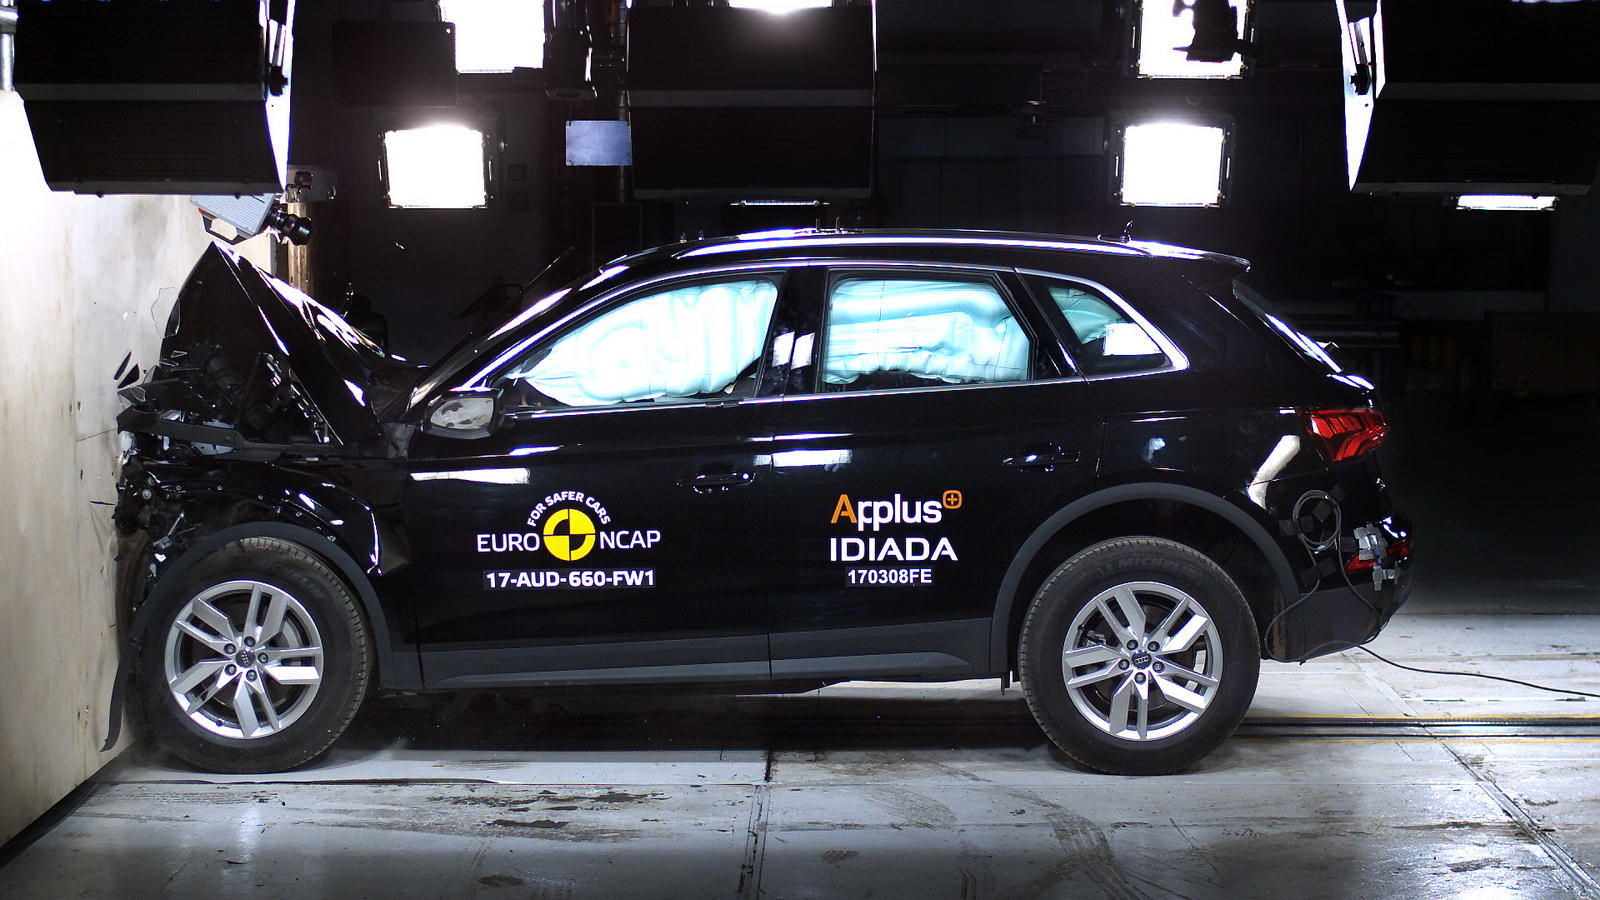 نتائج موسم اختبارات يورو NCAP لسلامة السيارات يكشف عنها 9